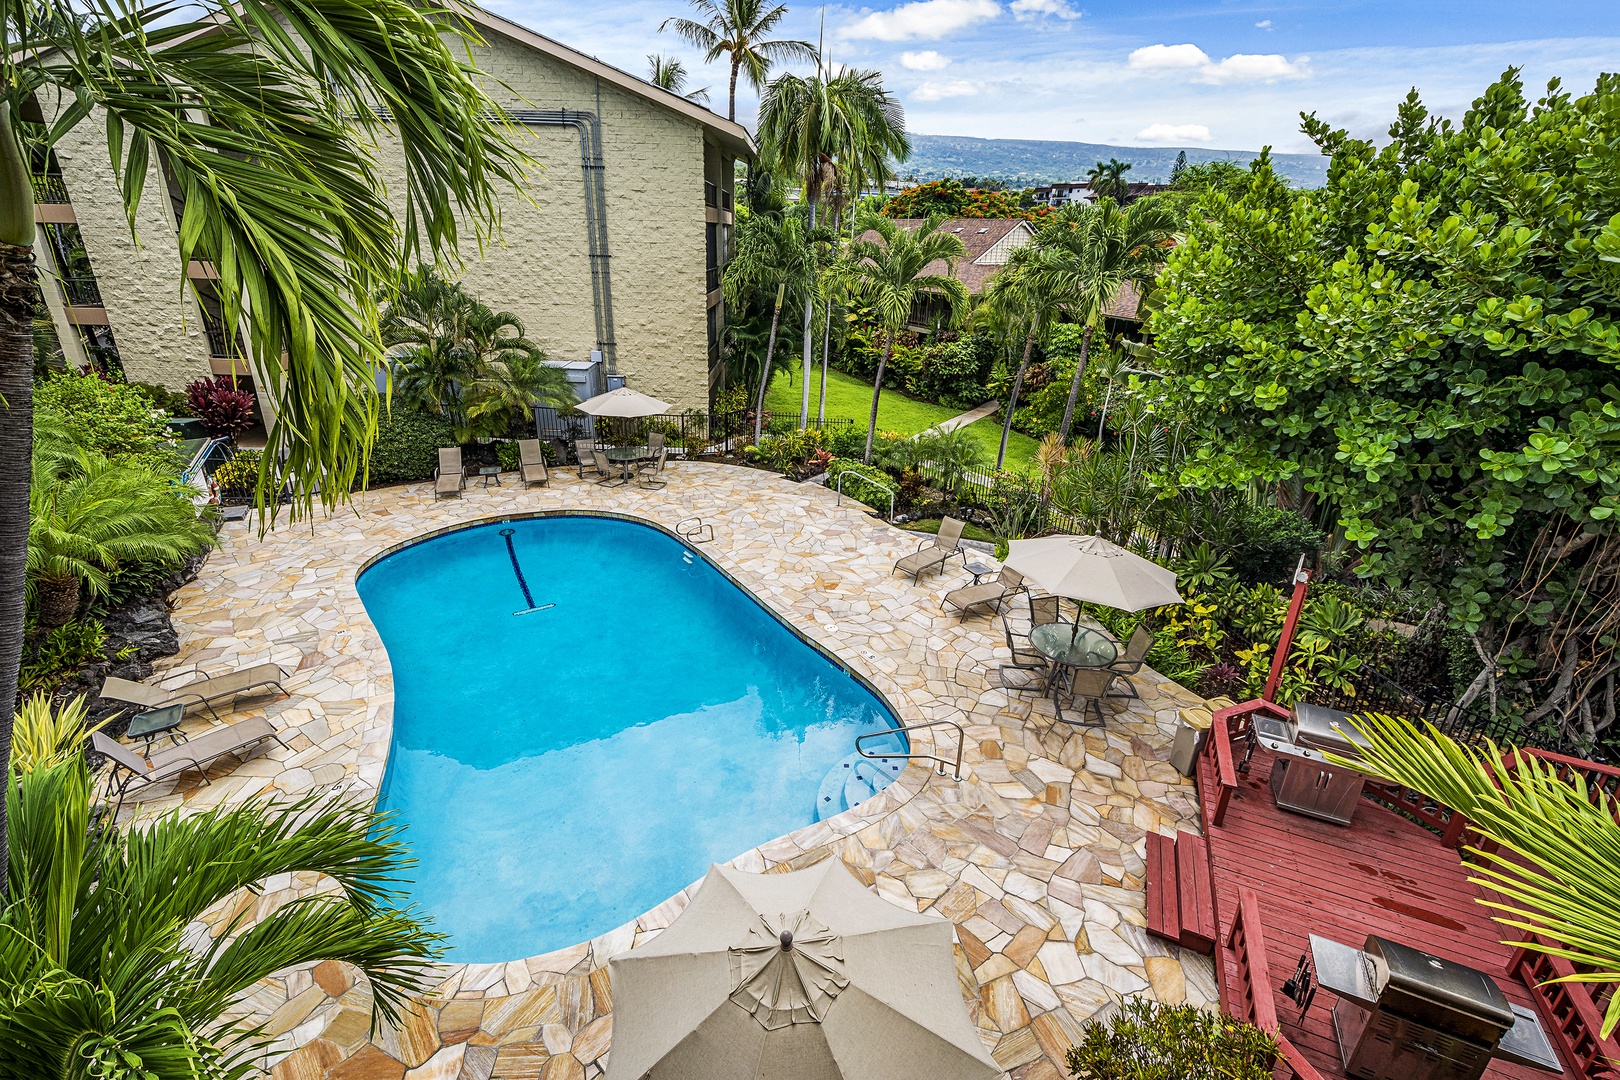 Kailua Kona Vacation Rentals, Kalanikai 306 - Refreshing community pool area